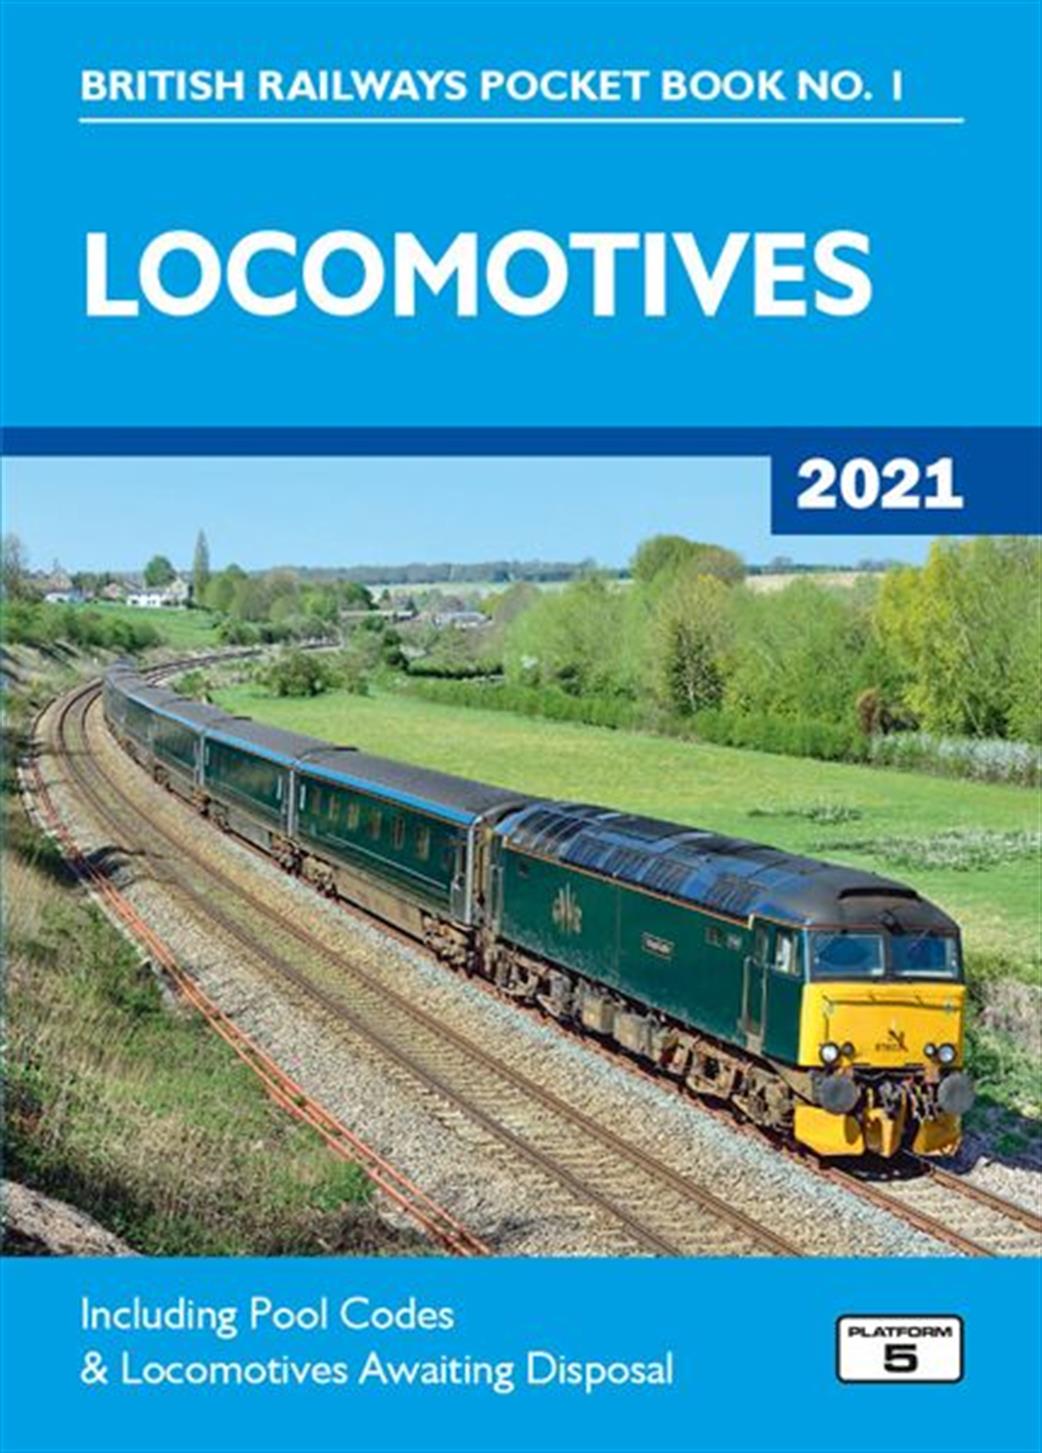 Platform 5 BRPB1 21 British Railways Locomotives 2021 Pocket Book